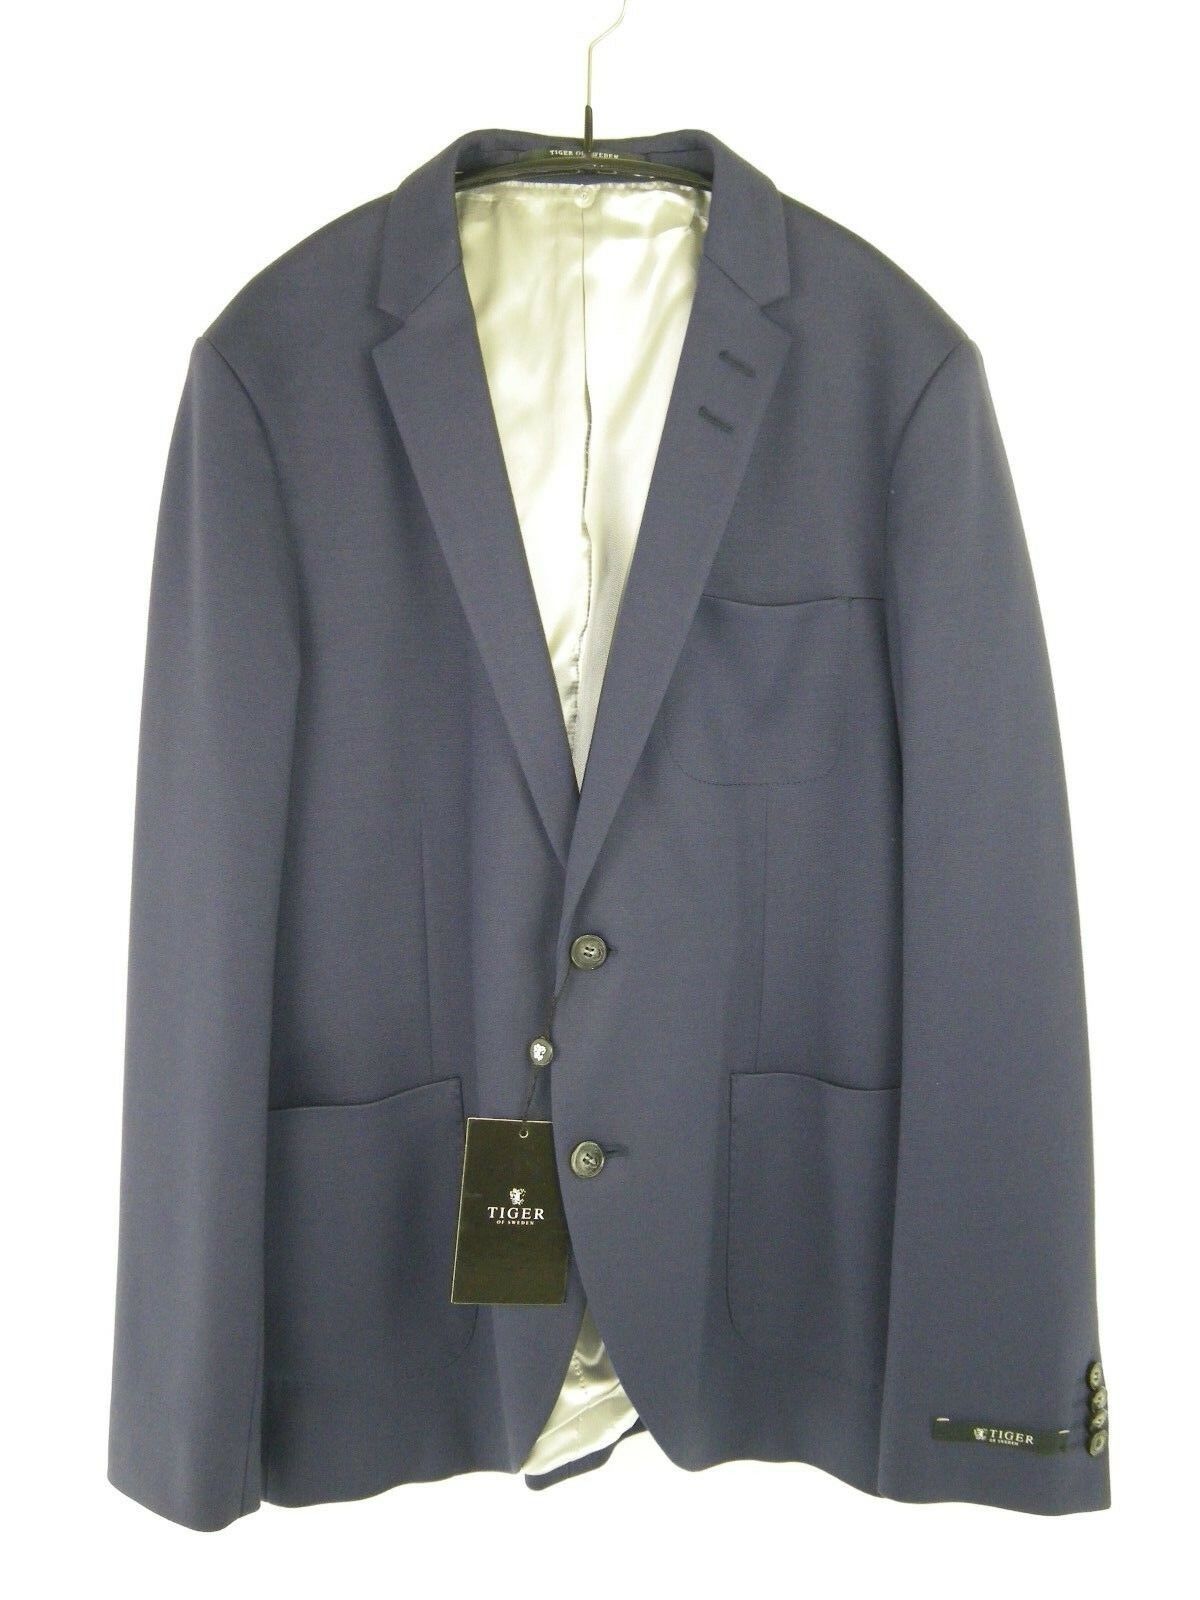 TIGER OF SWEDEN Herren Herrenjacke Sakko Jacke Jacket Hoyt Gr 50 Blau Slim Fit 